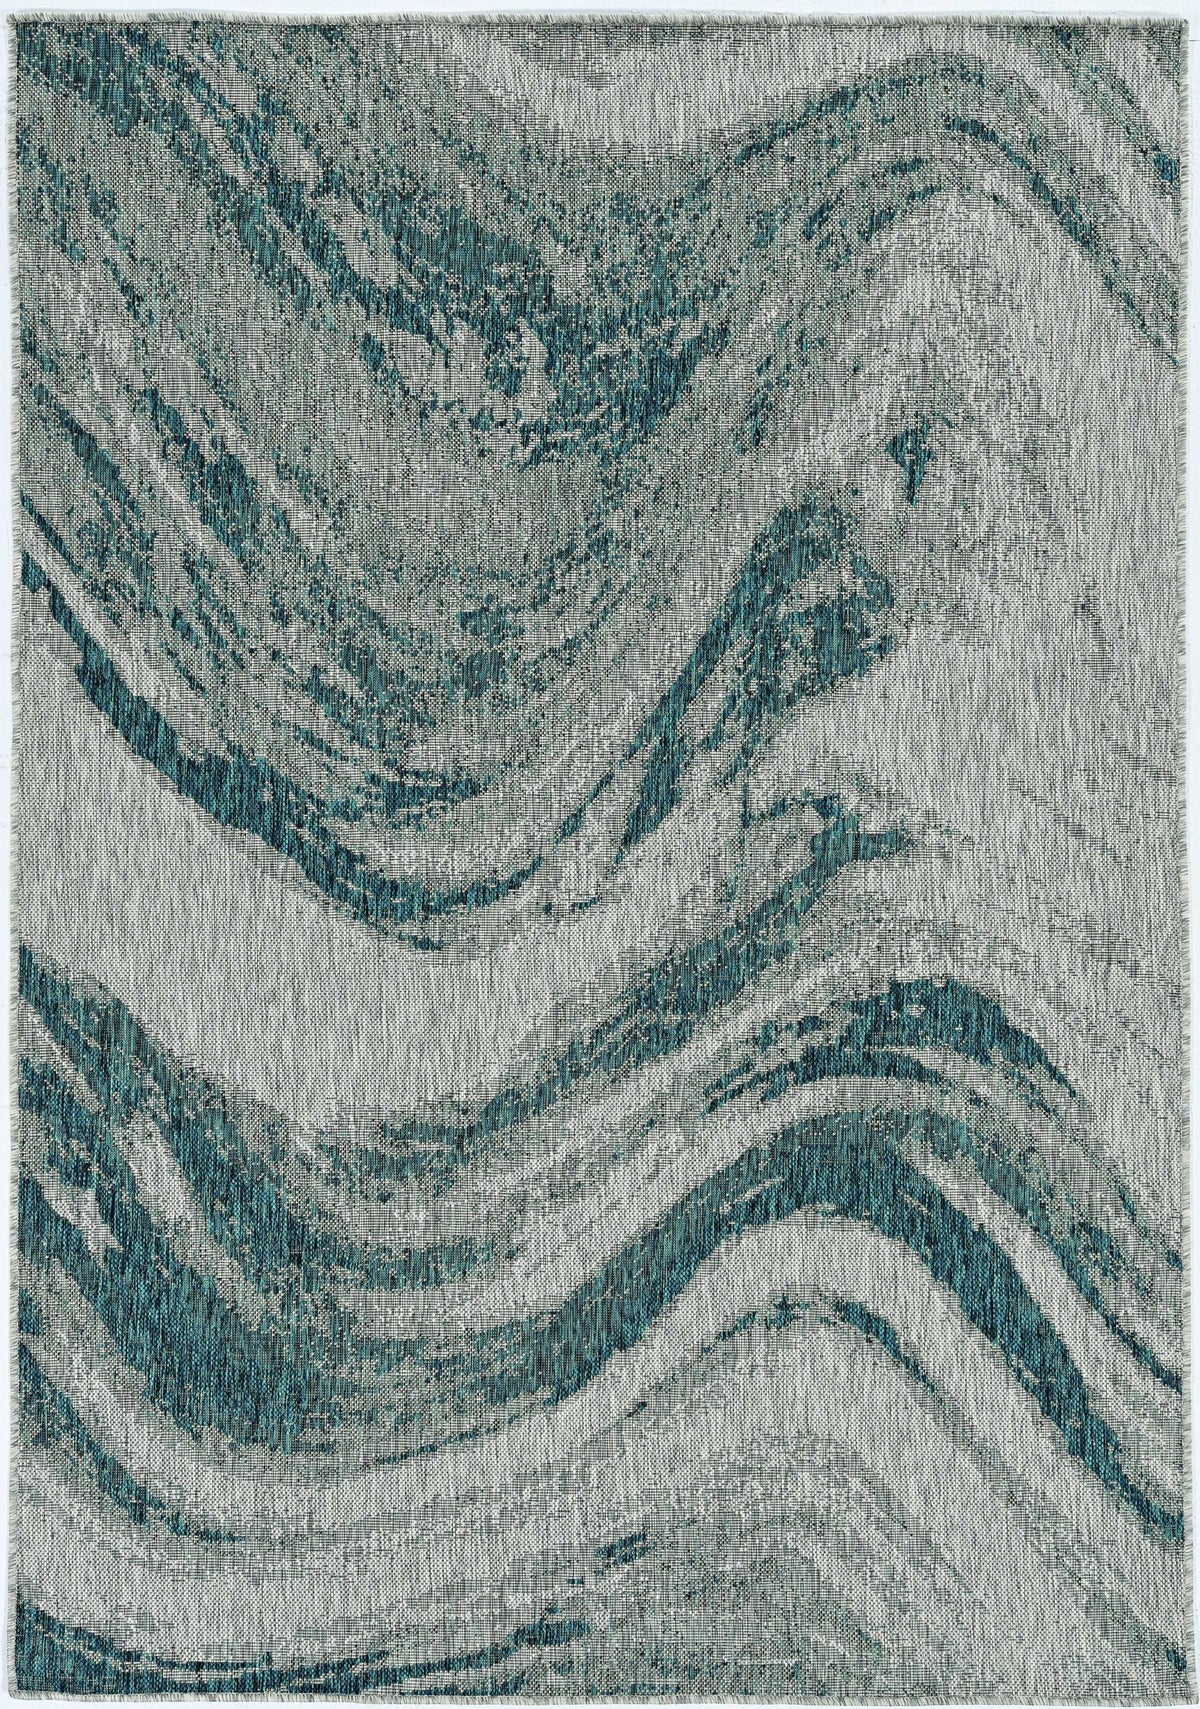 5' X 8' Grey Or Teal Abstract Waves Rug